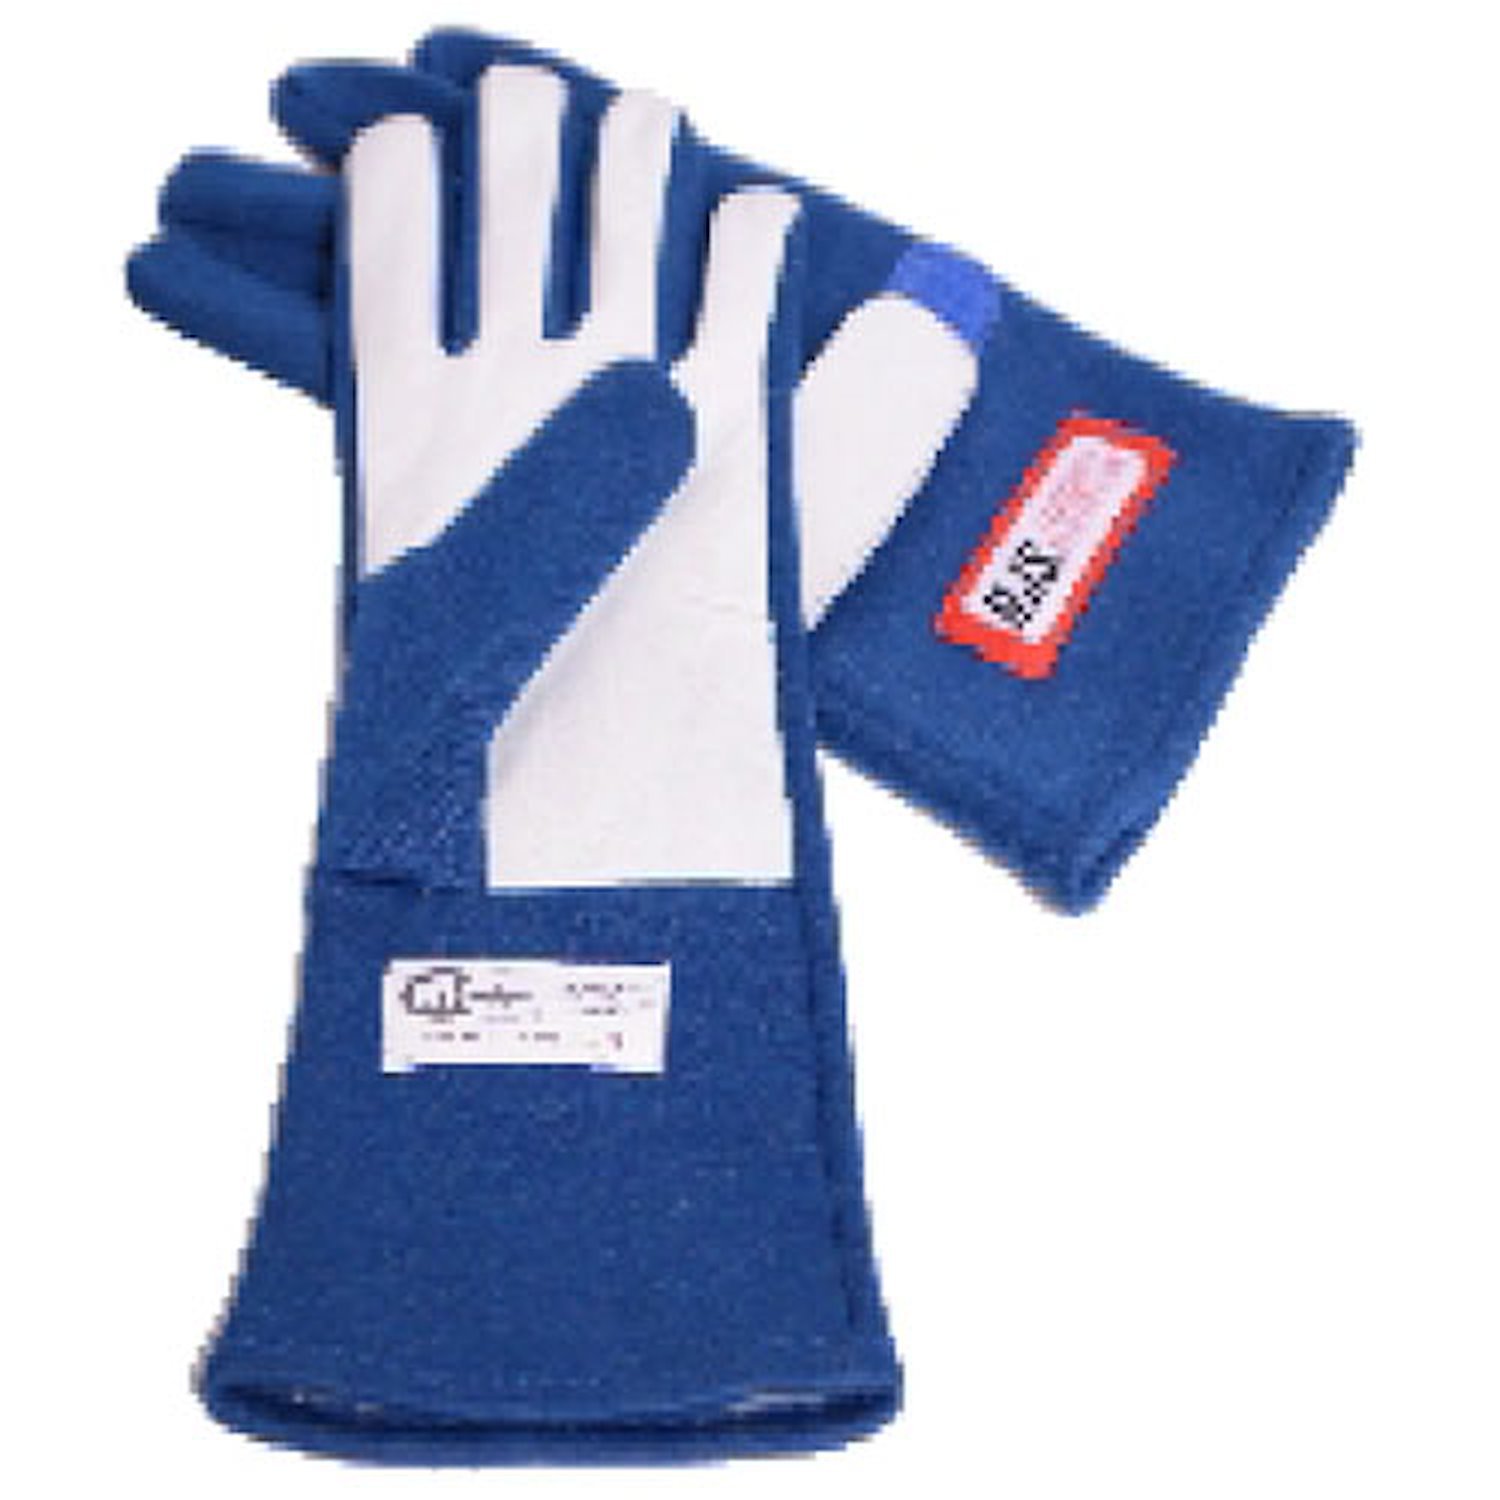 RJS Racing Classic Single-Layer Racing Gloves